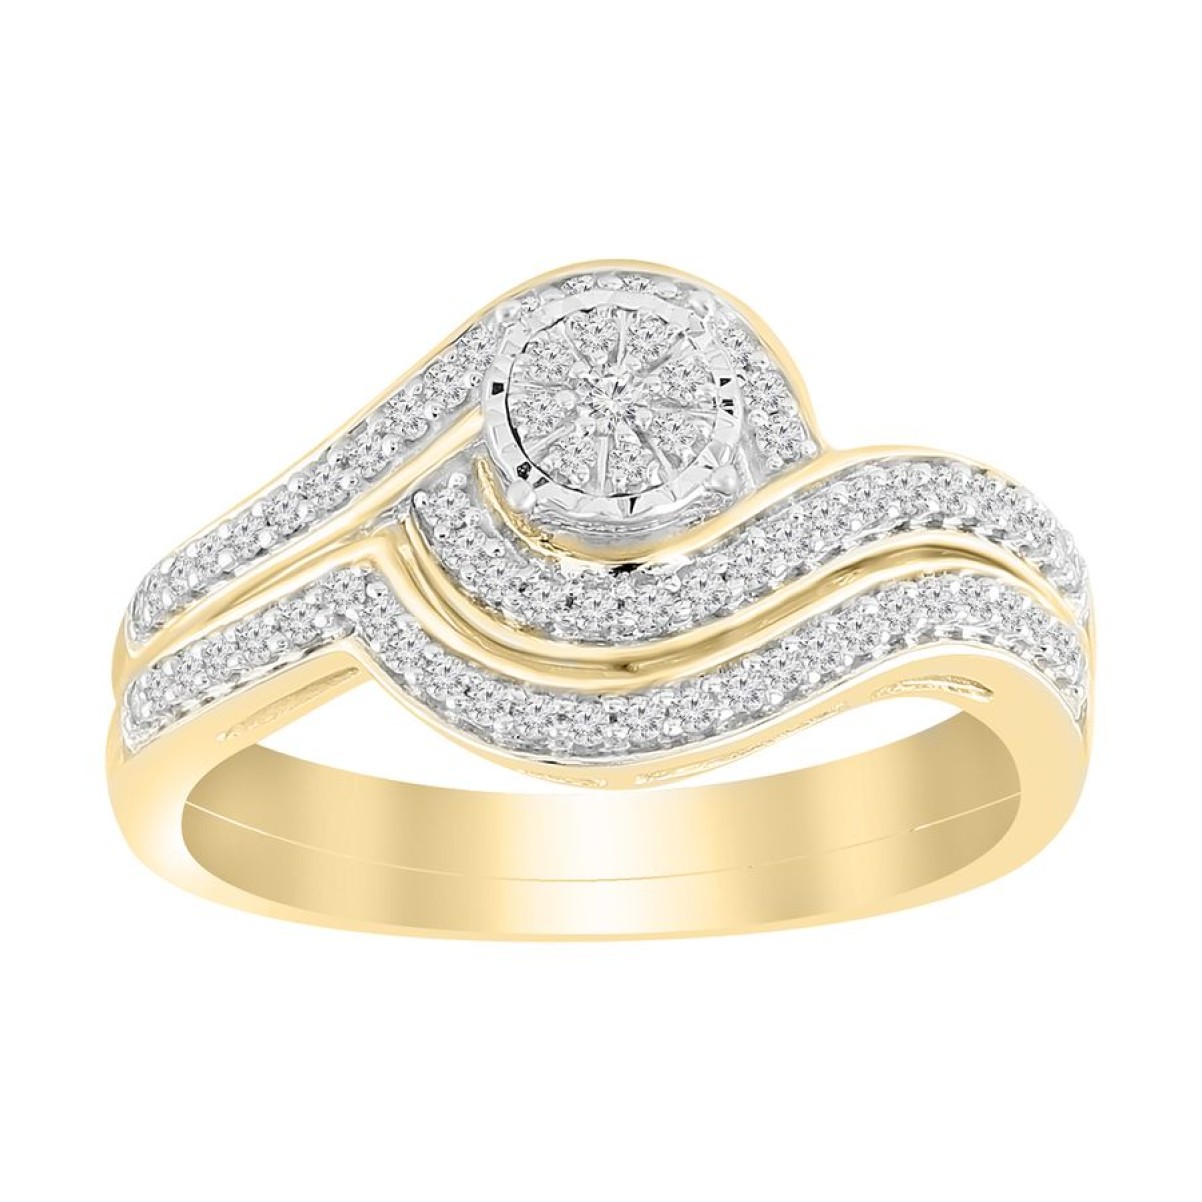 BRIDAL RING SET 0.33CT ROUND DIAMOND 10K YELLOW GOLD